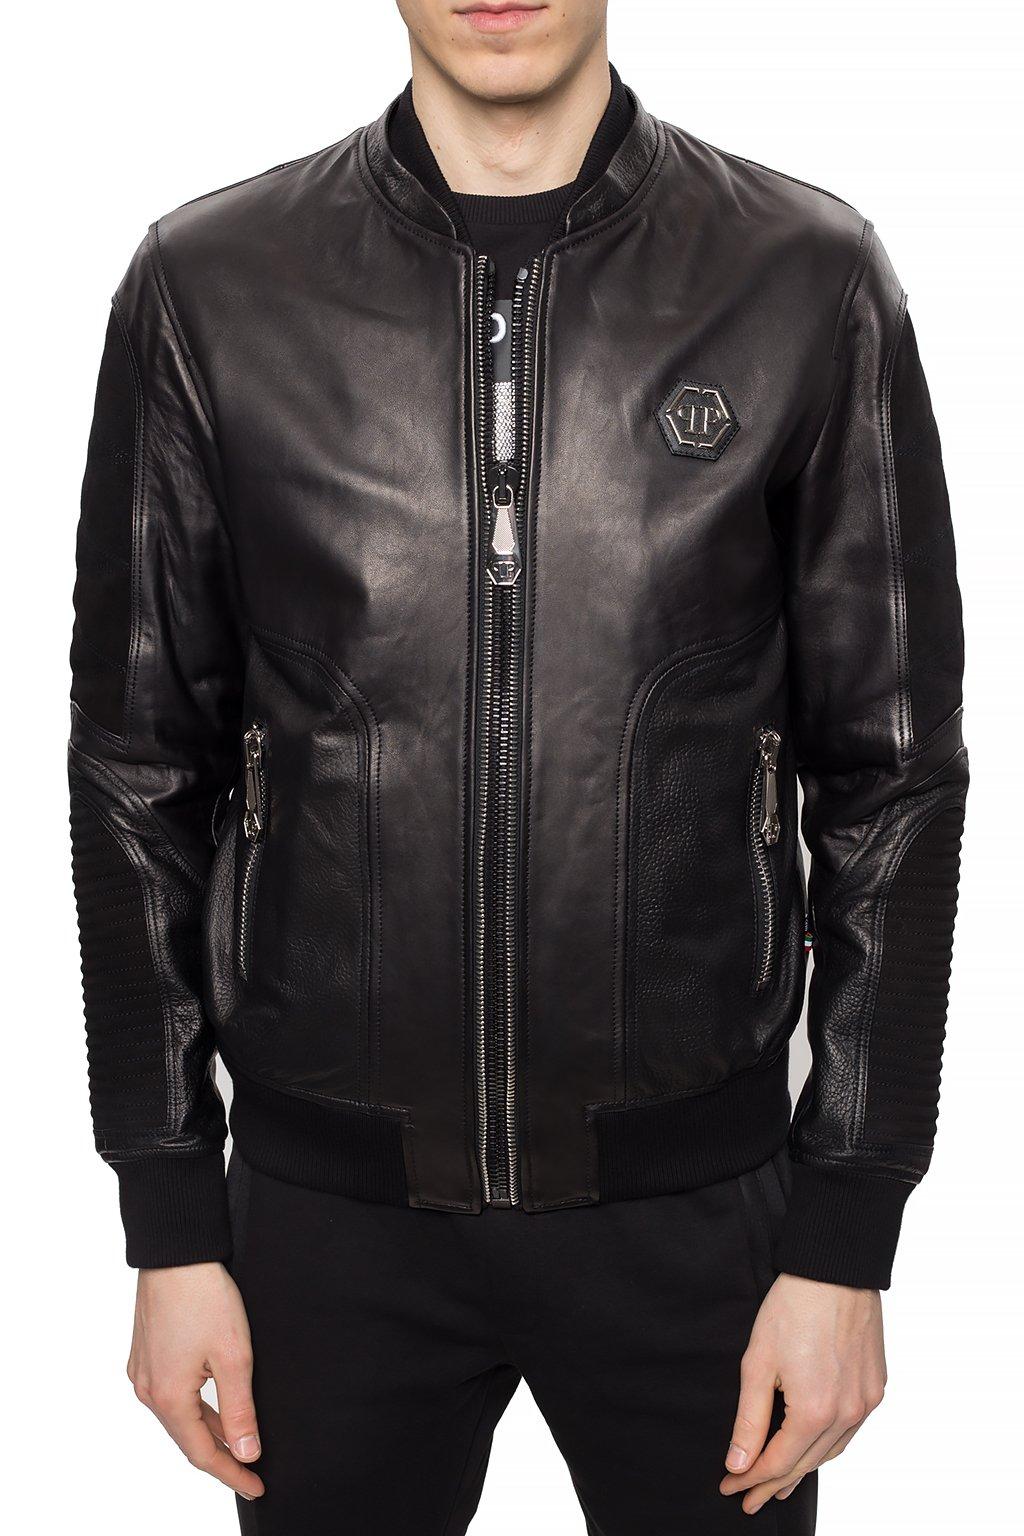 Philipp Plein Leather Jacket Black for Men - Lyst